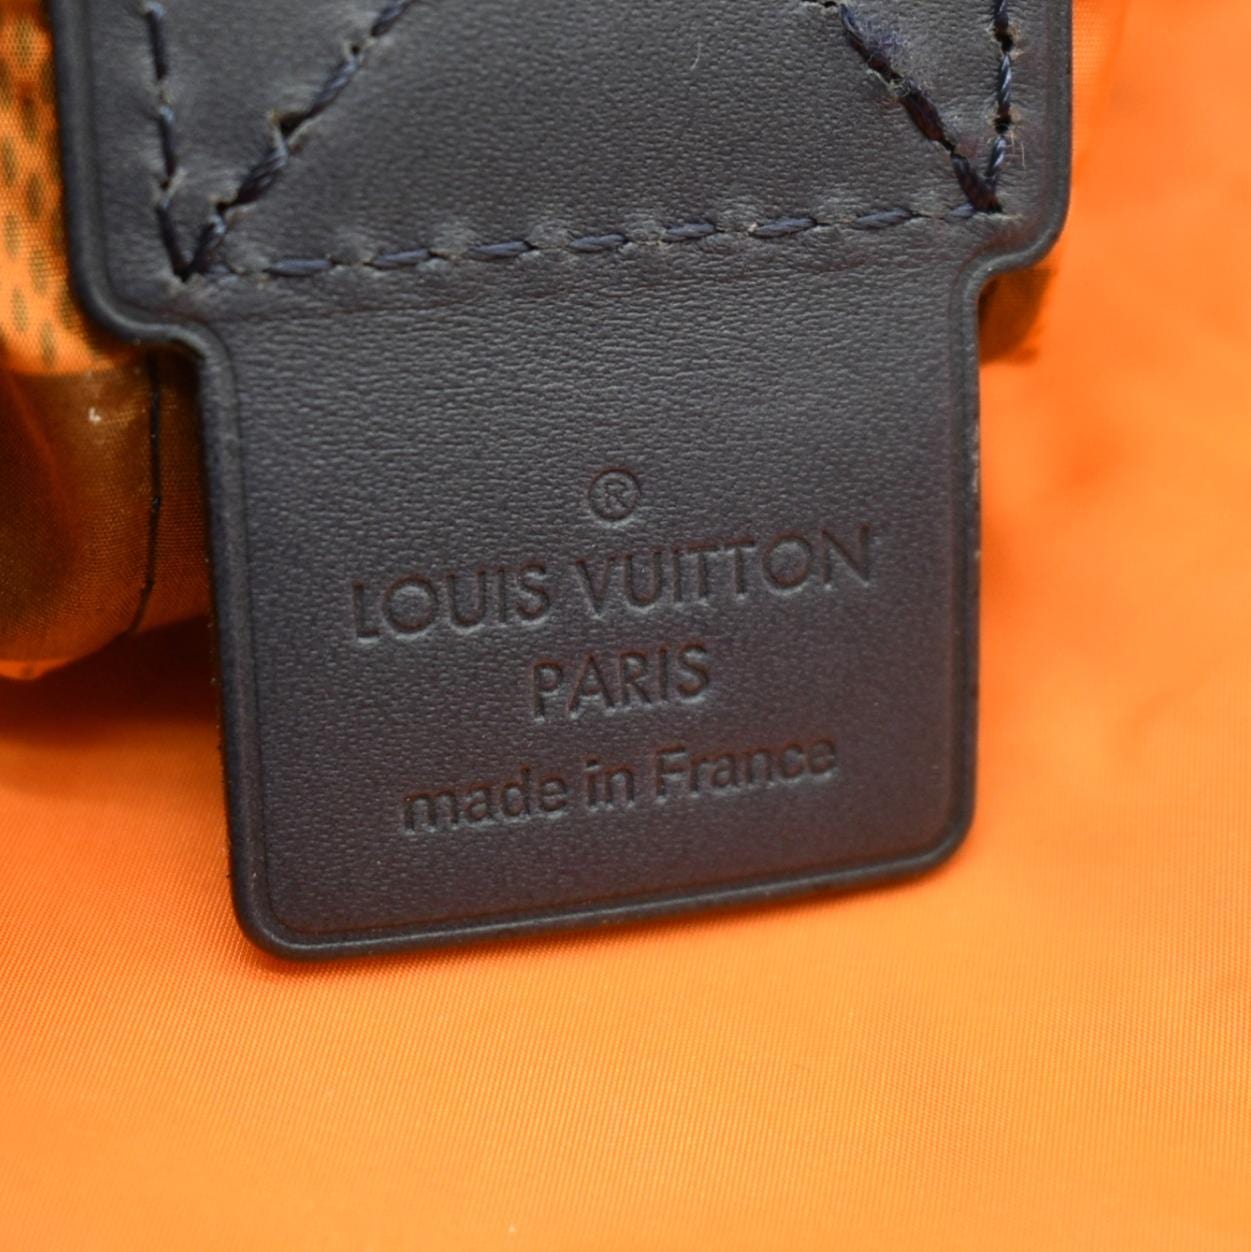 Explore our Louis Vuitton Damier Aventure Practical Duffle Bag Louis Vuitton  for the latest deals and products